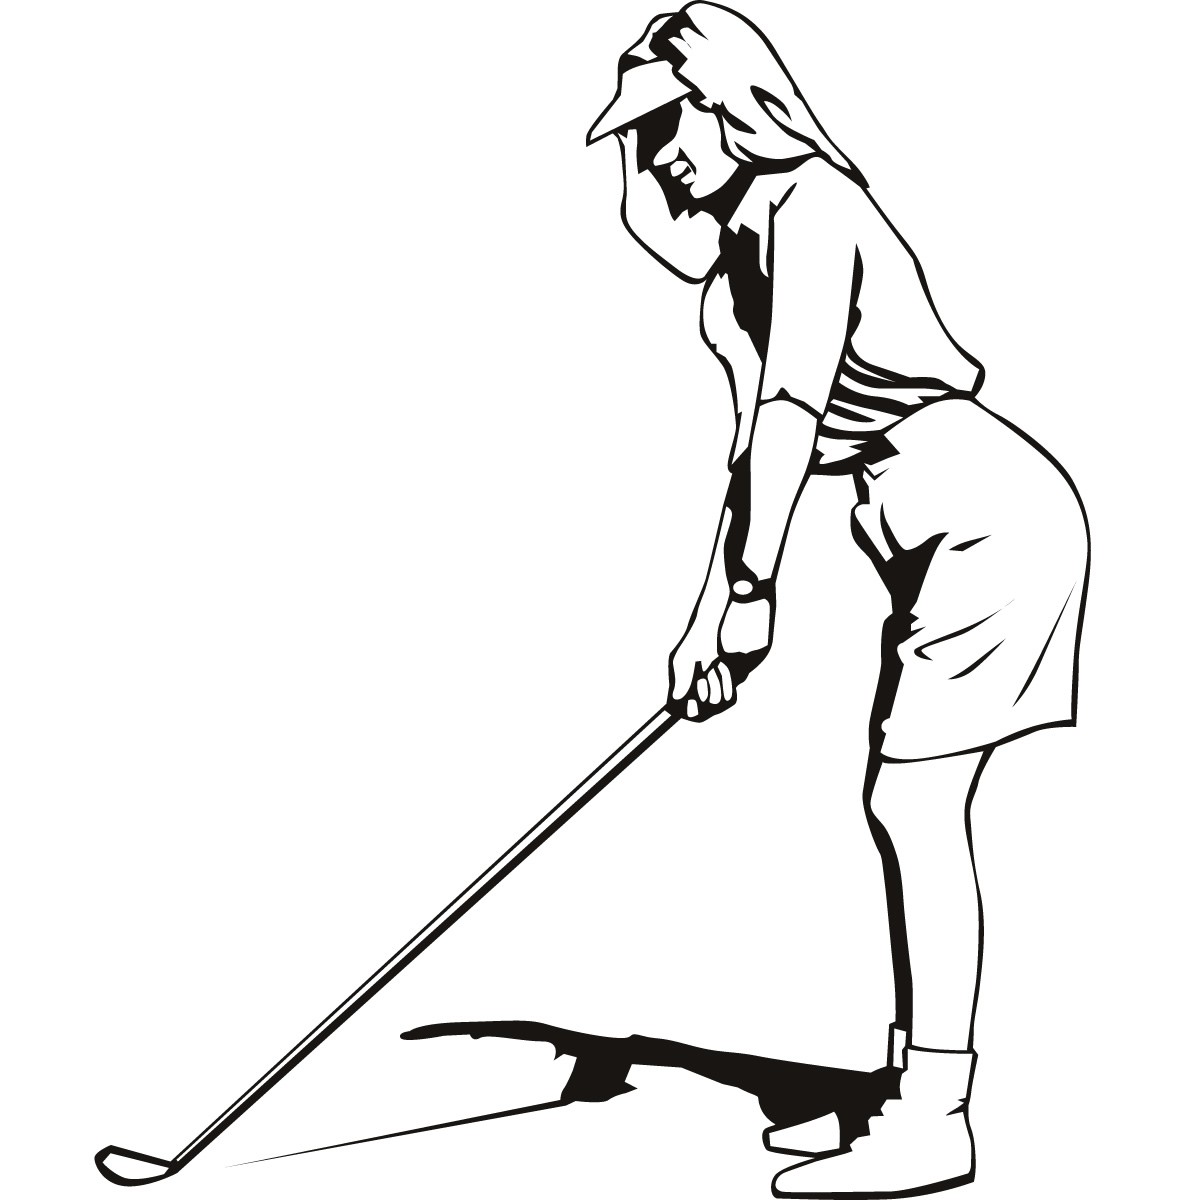 Free cliparts download clip. Golf clipart female golfer